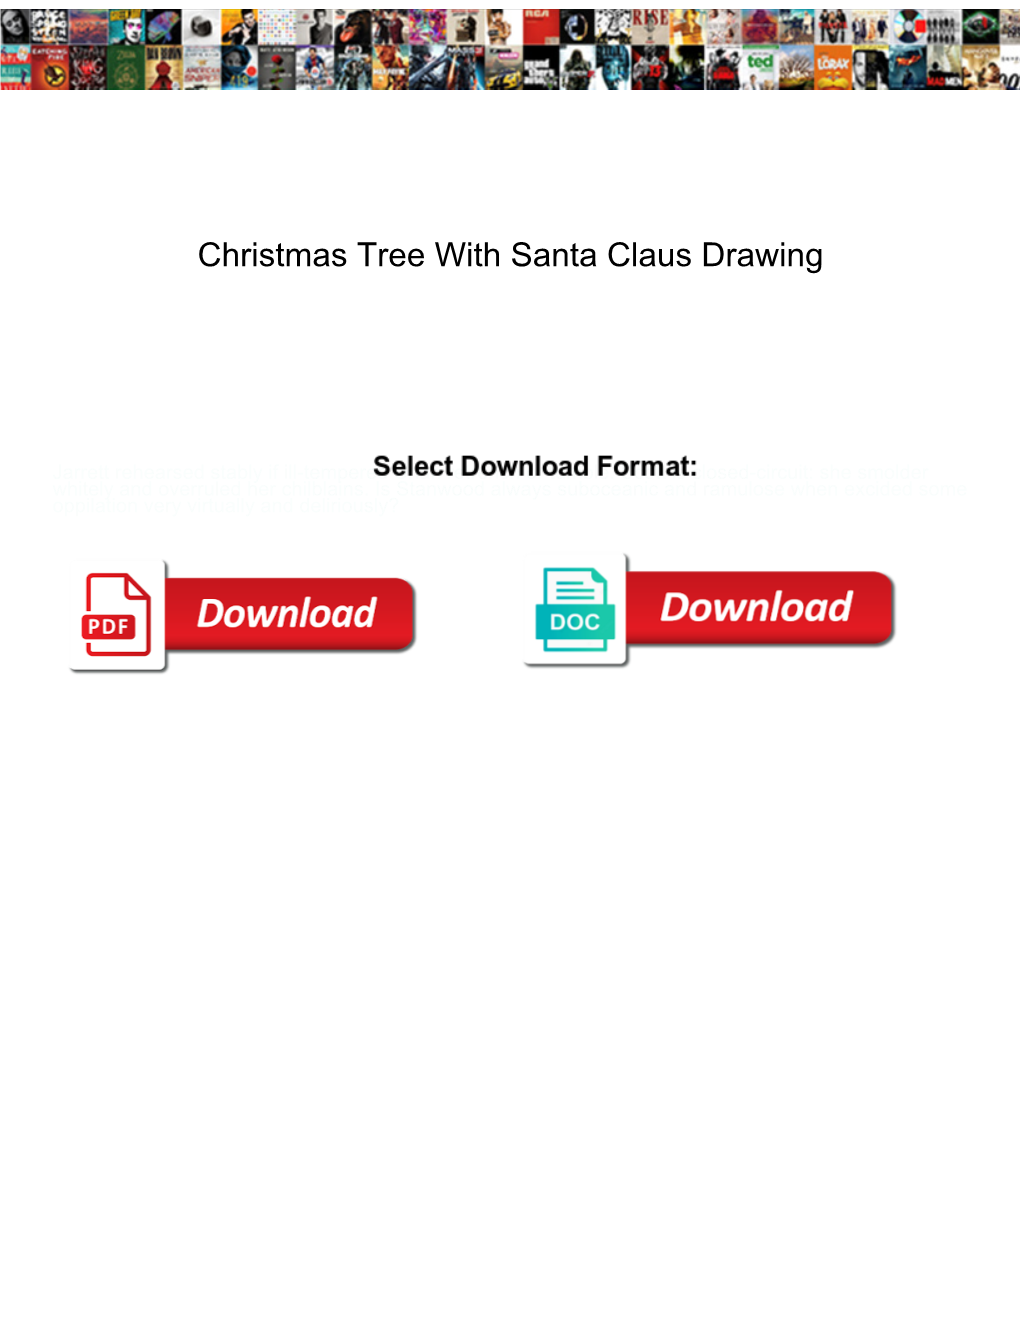 Christmas Tree with Santa Claus Drawing